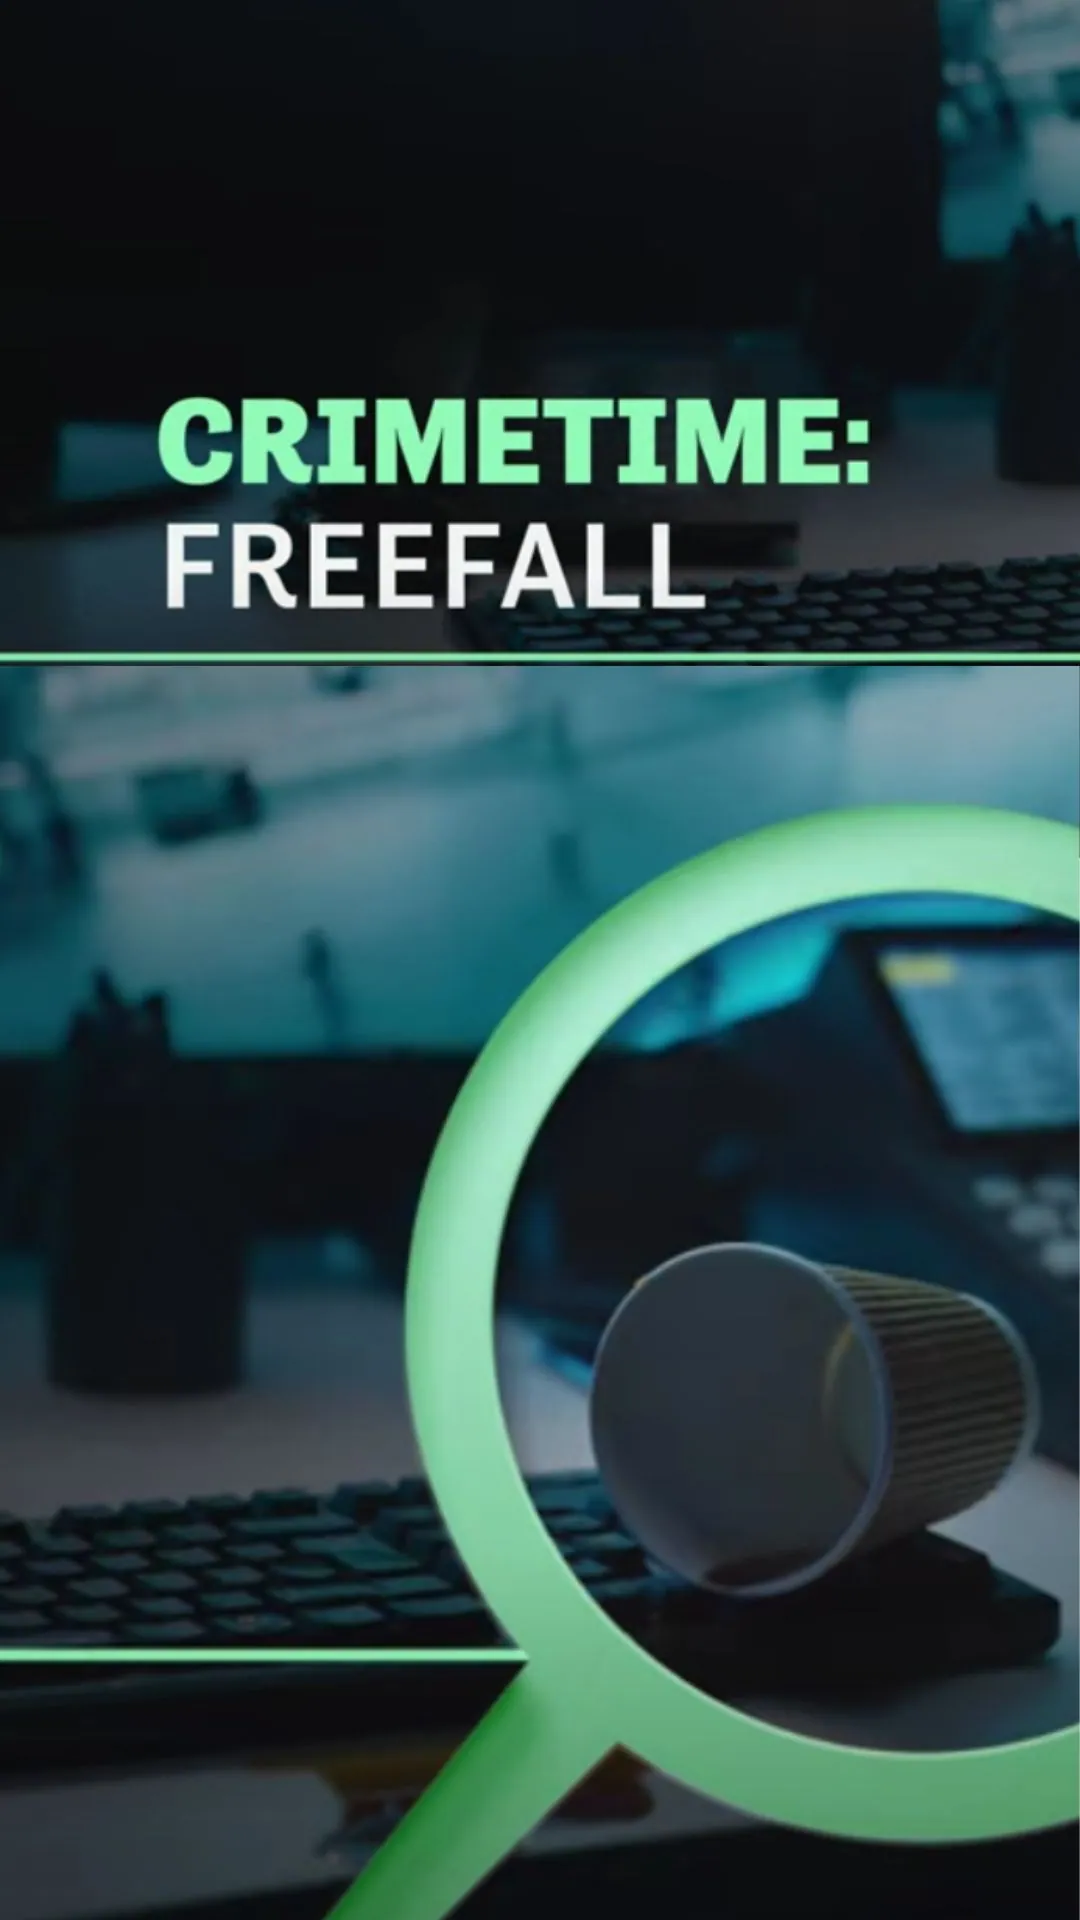 CrimeTime: Freefall Age Rating